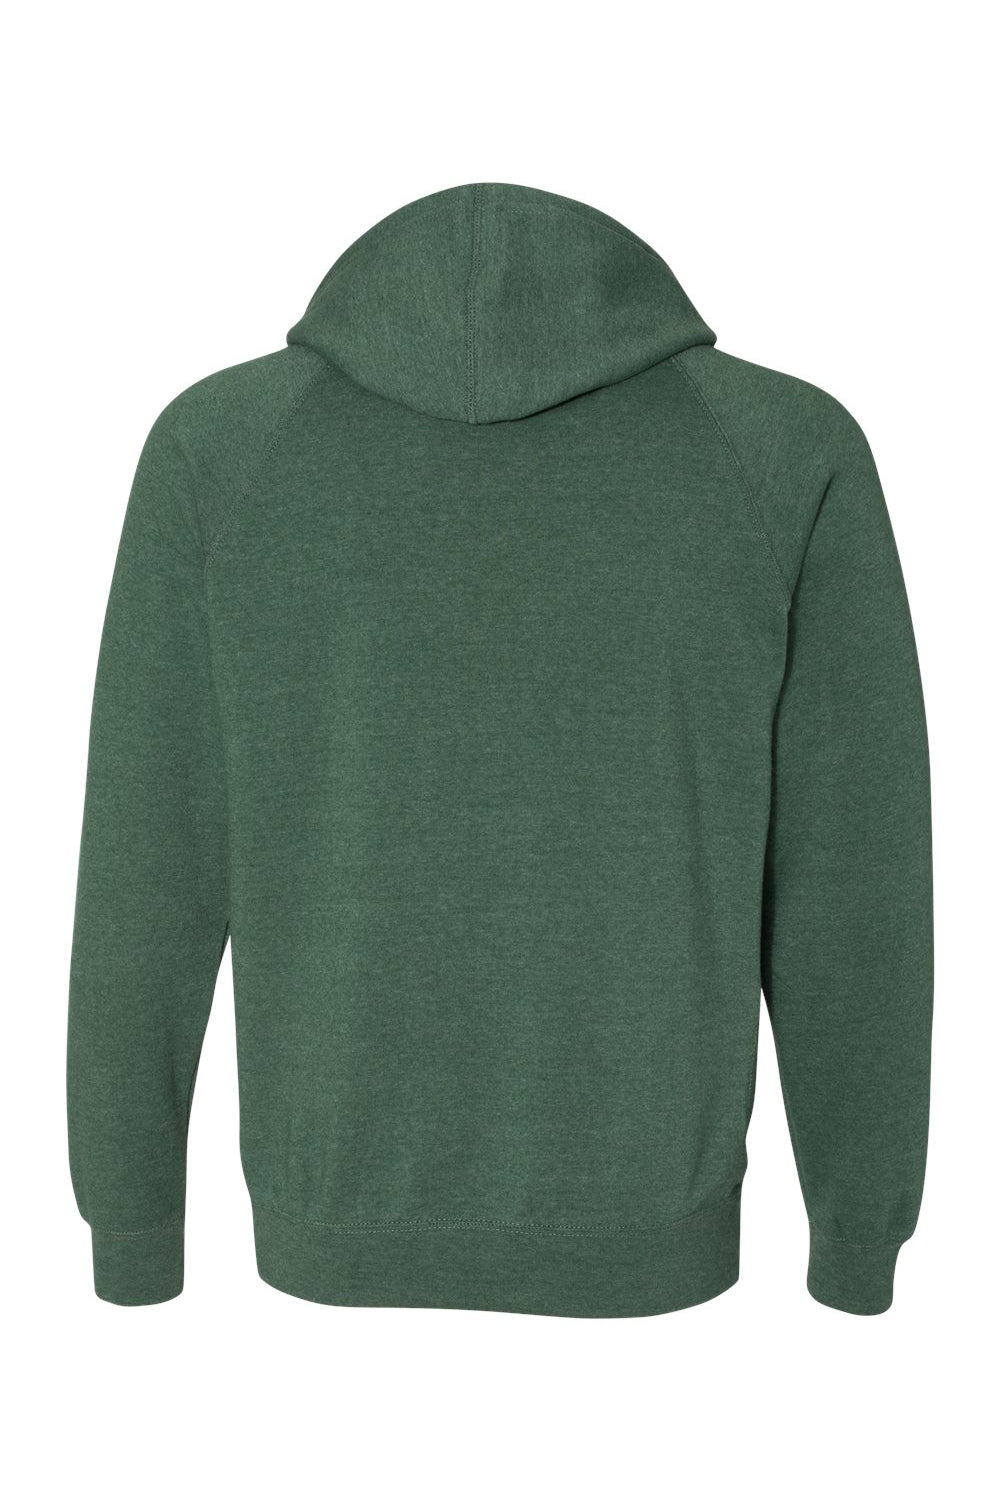 Independent Trading Co. PRM33SBP Mens Special Blend Raglan Hooded Sweatshirt Hoodie Moss Green Flat Back